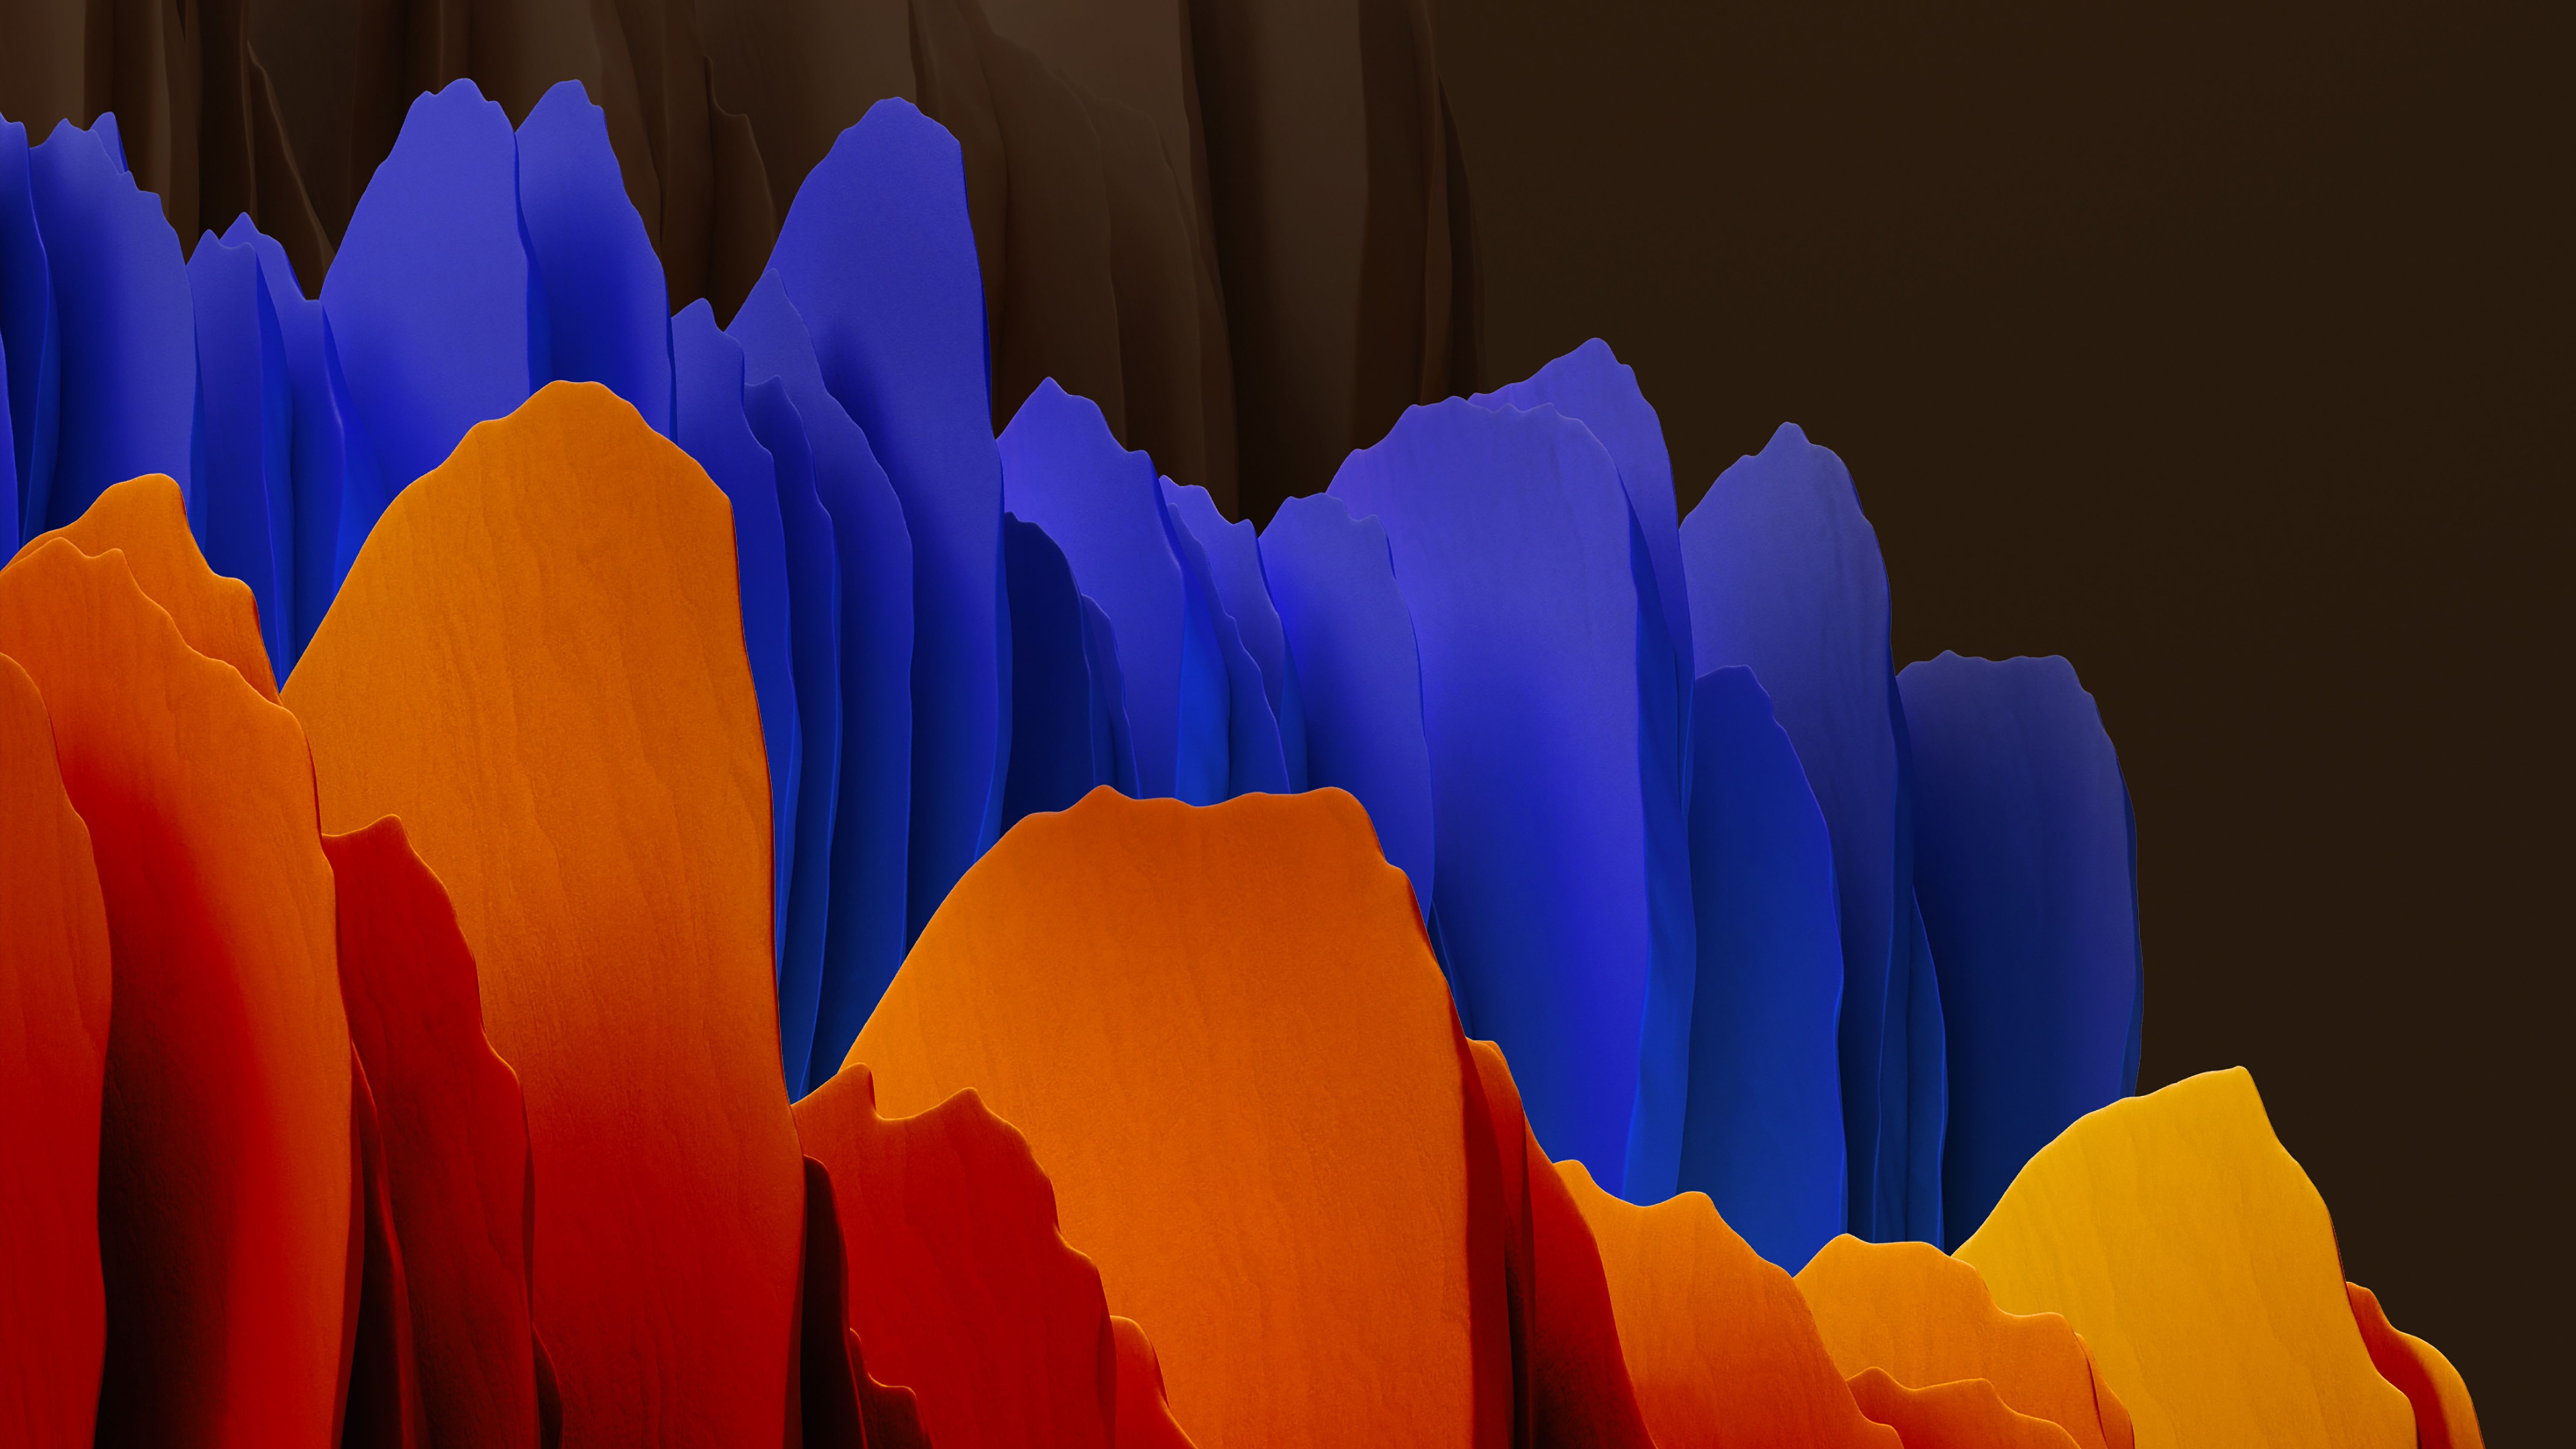 A mountain range of folded paper in blue, red, and orange. - Dark orange